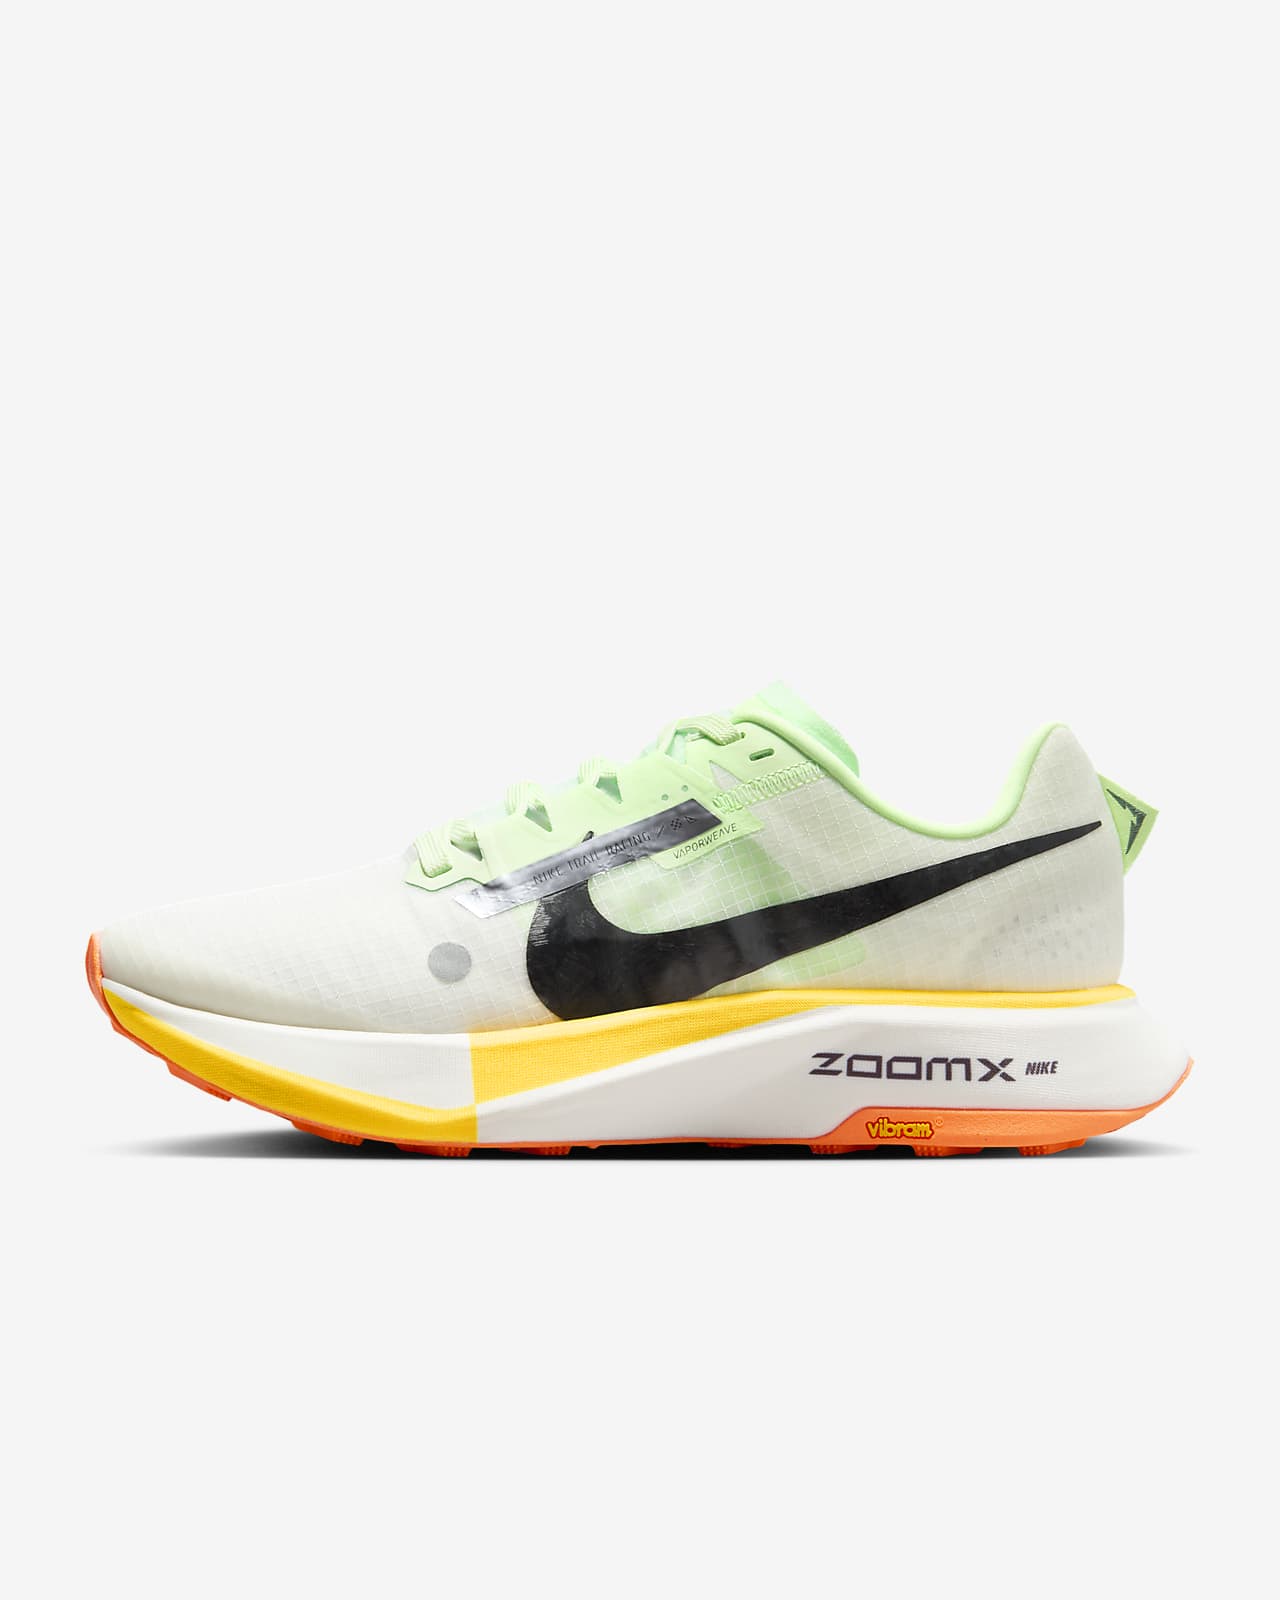 Nike Running (@nikerunning) • Instagram photos and videos